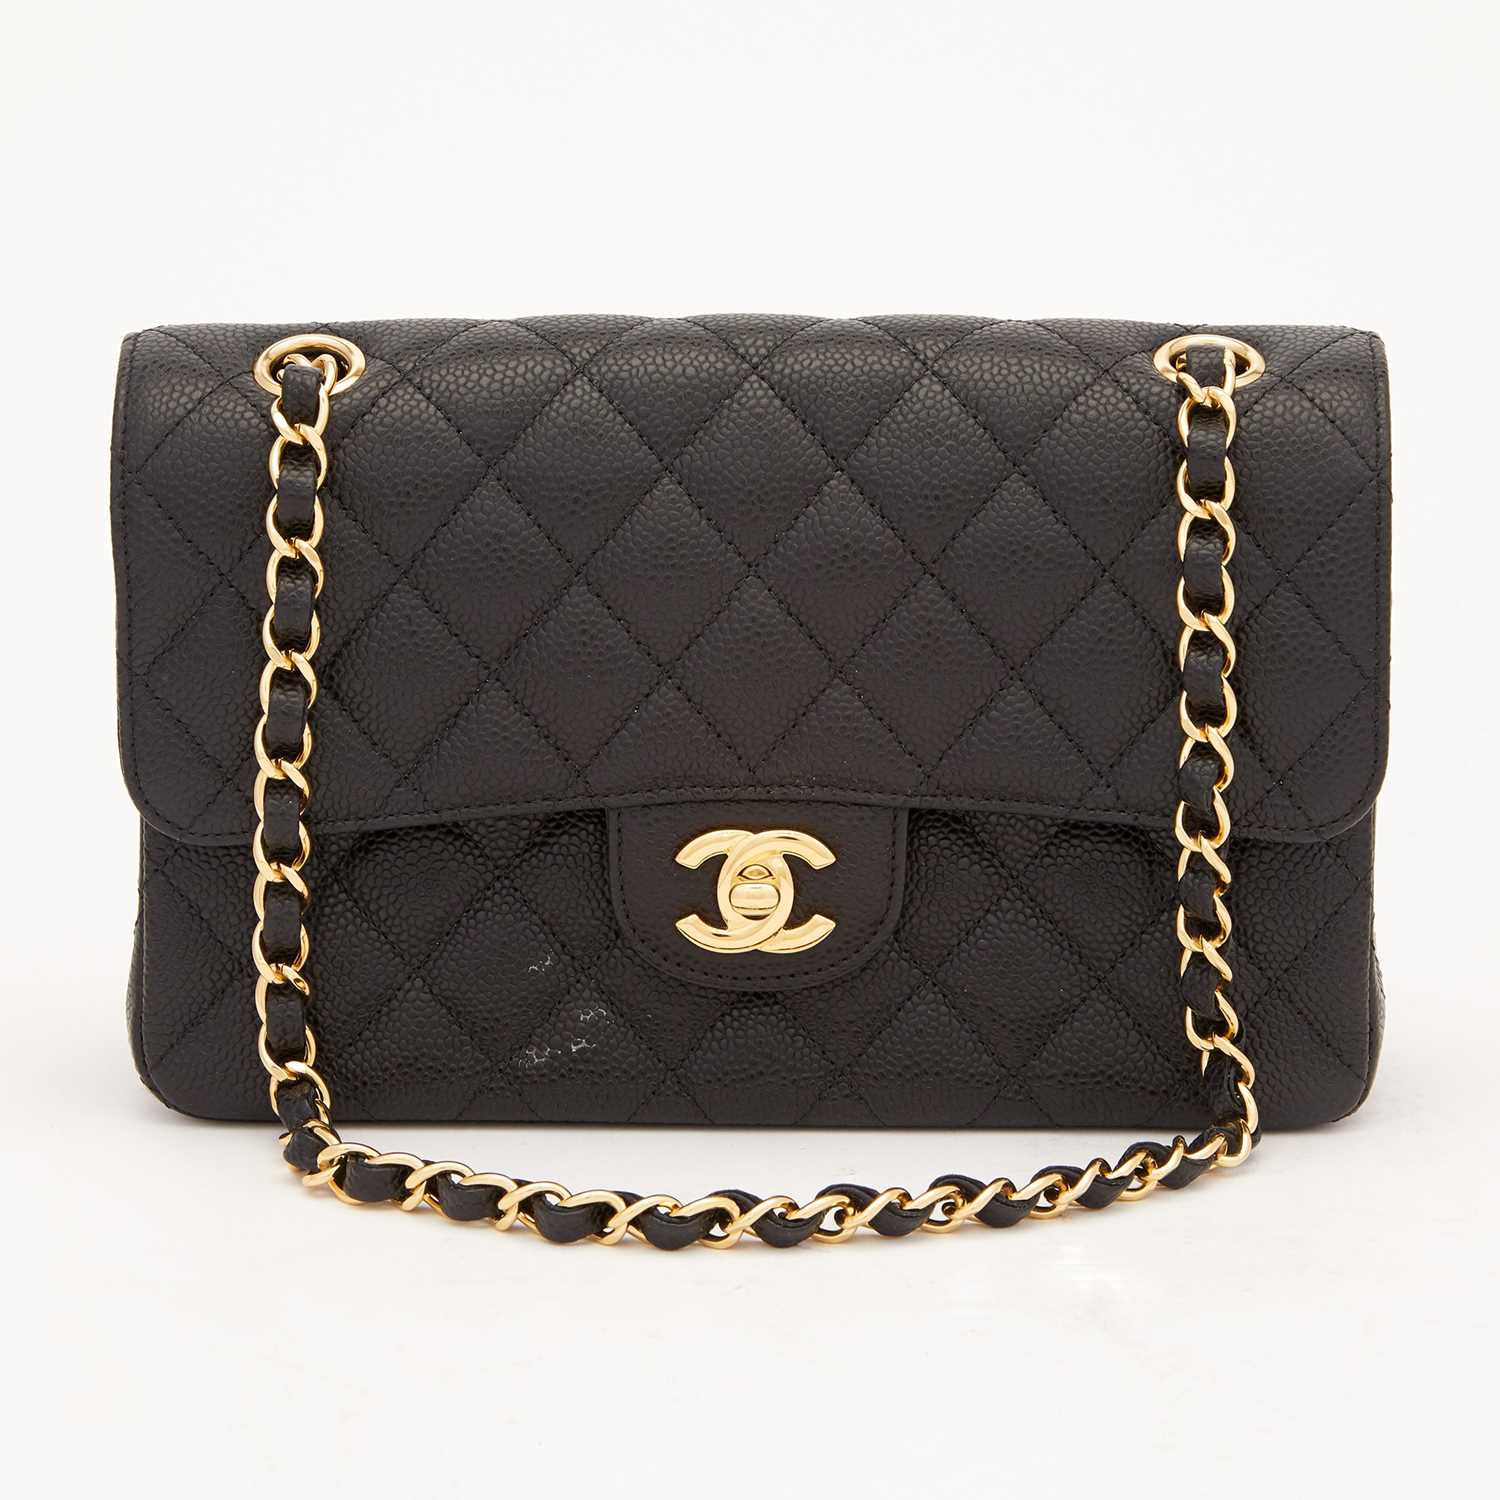 Lot 180 - Chanel Black Caviar Leather Double Flap Bag